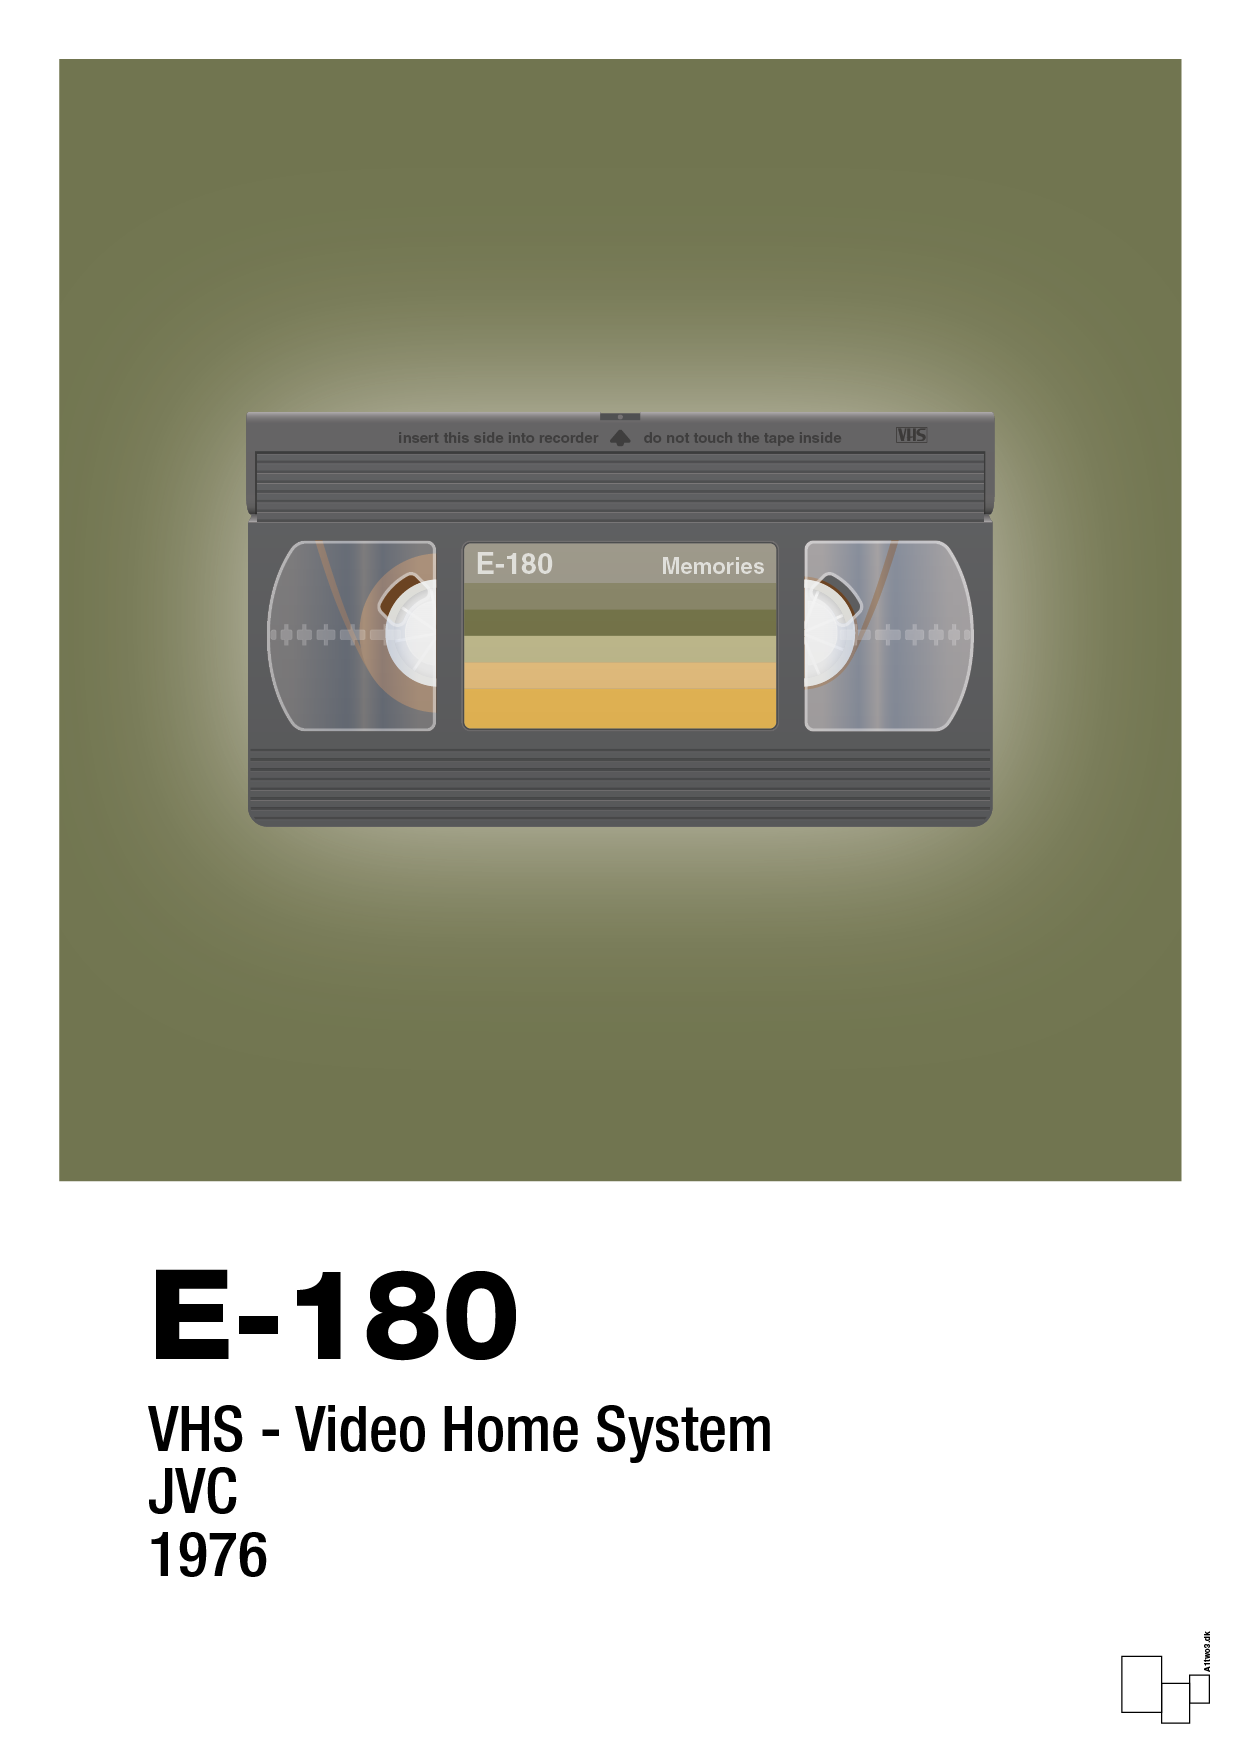 videobånd e-180 - Plakat med Grafik i Secret Meadow